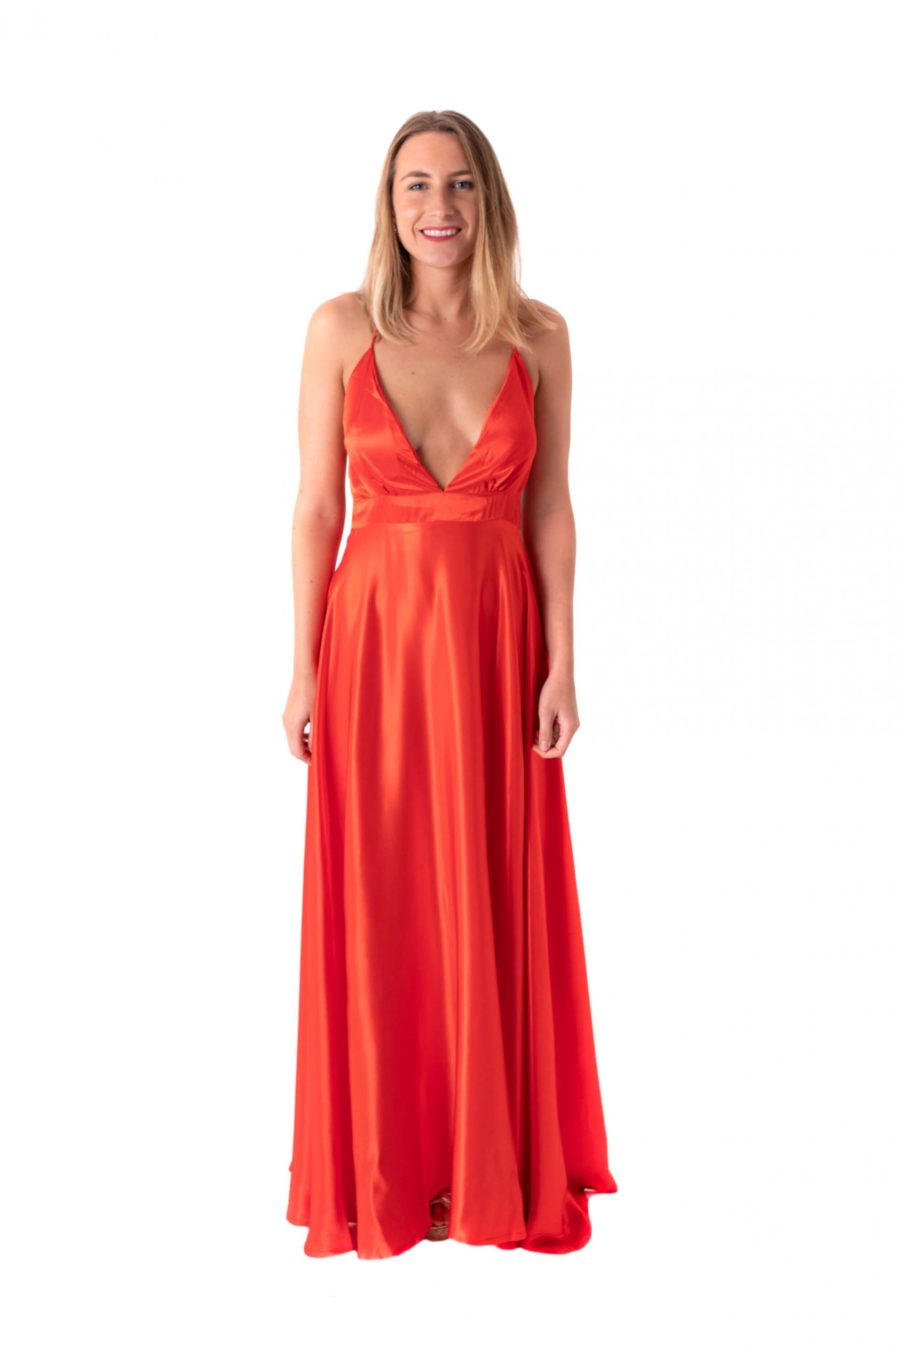 Vestido rojo de largo - Chic Dress Project